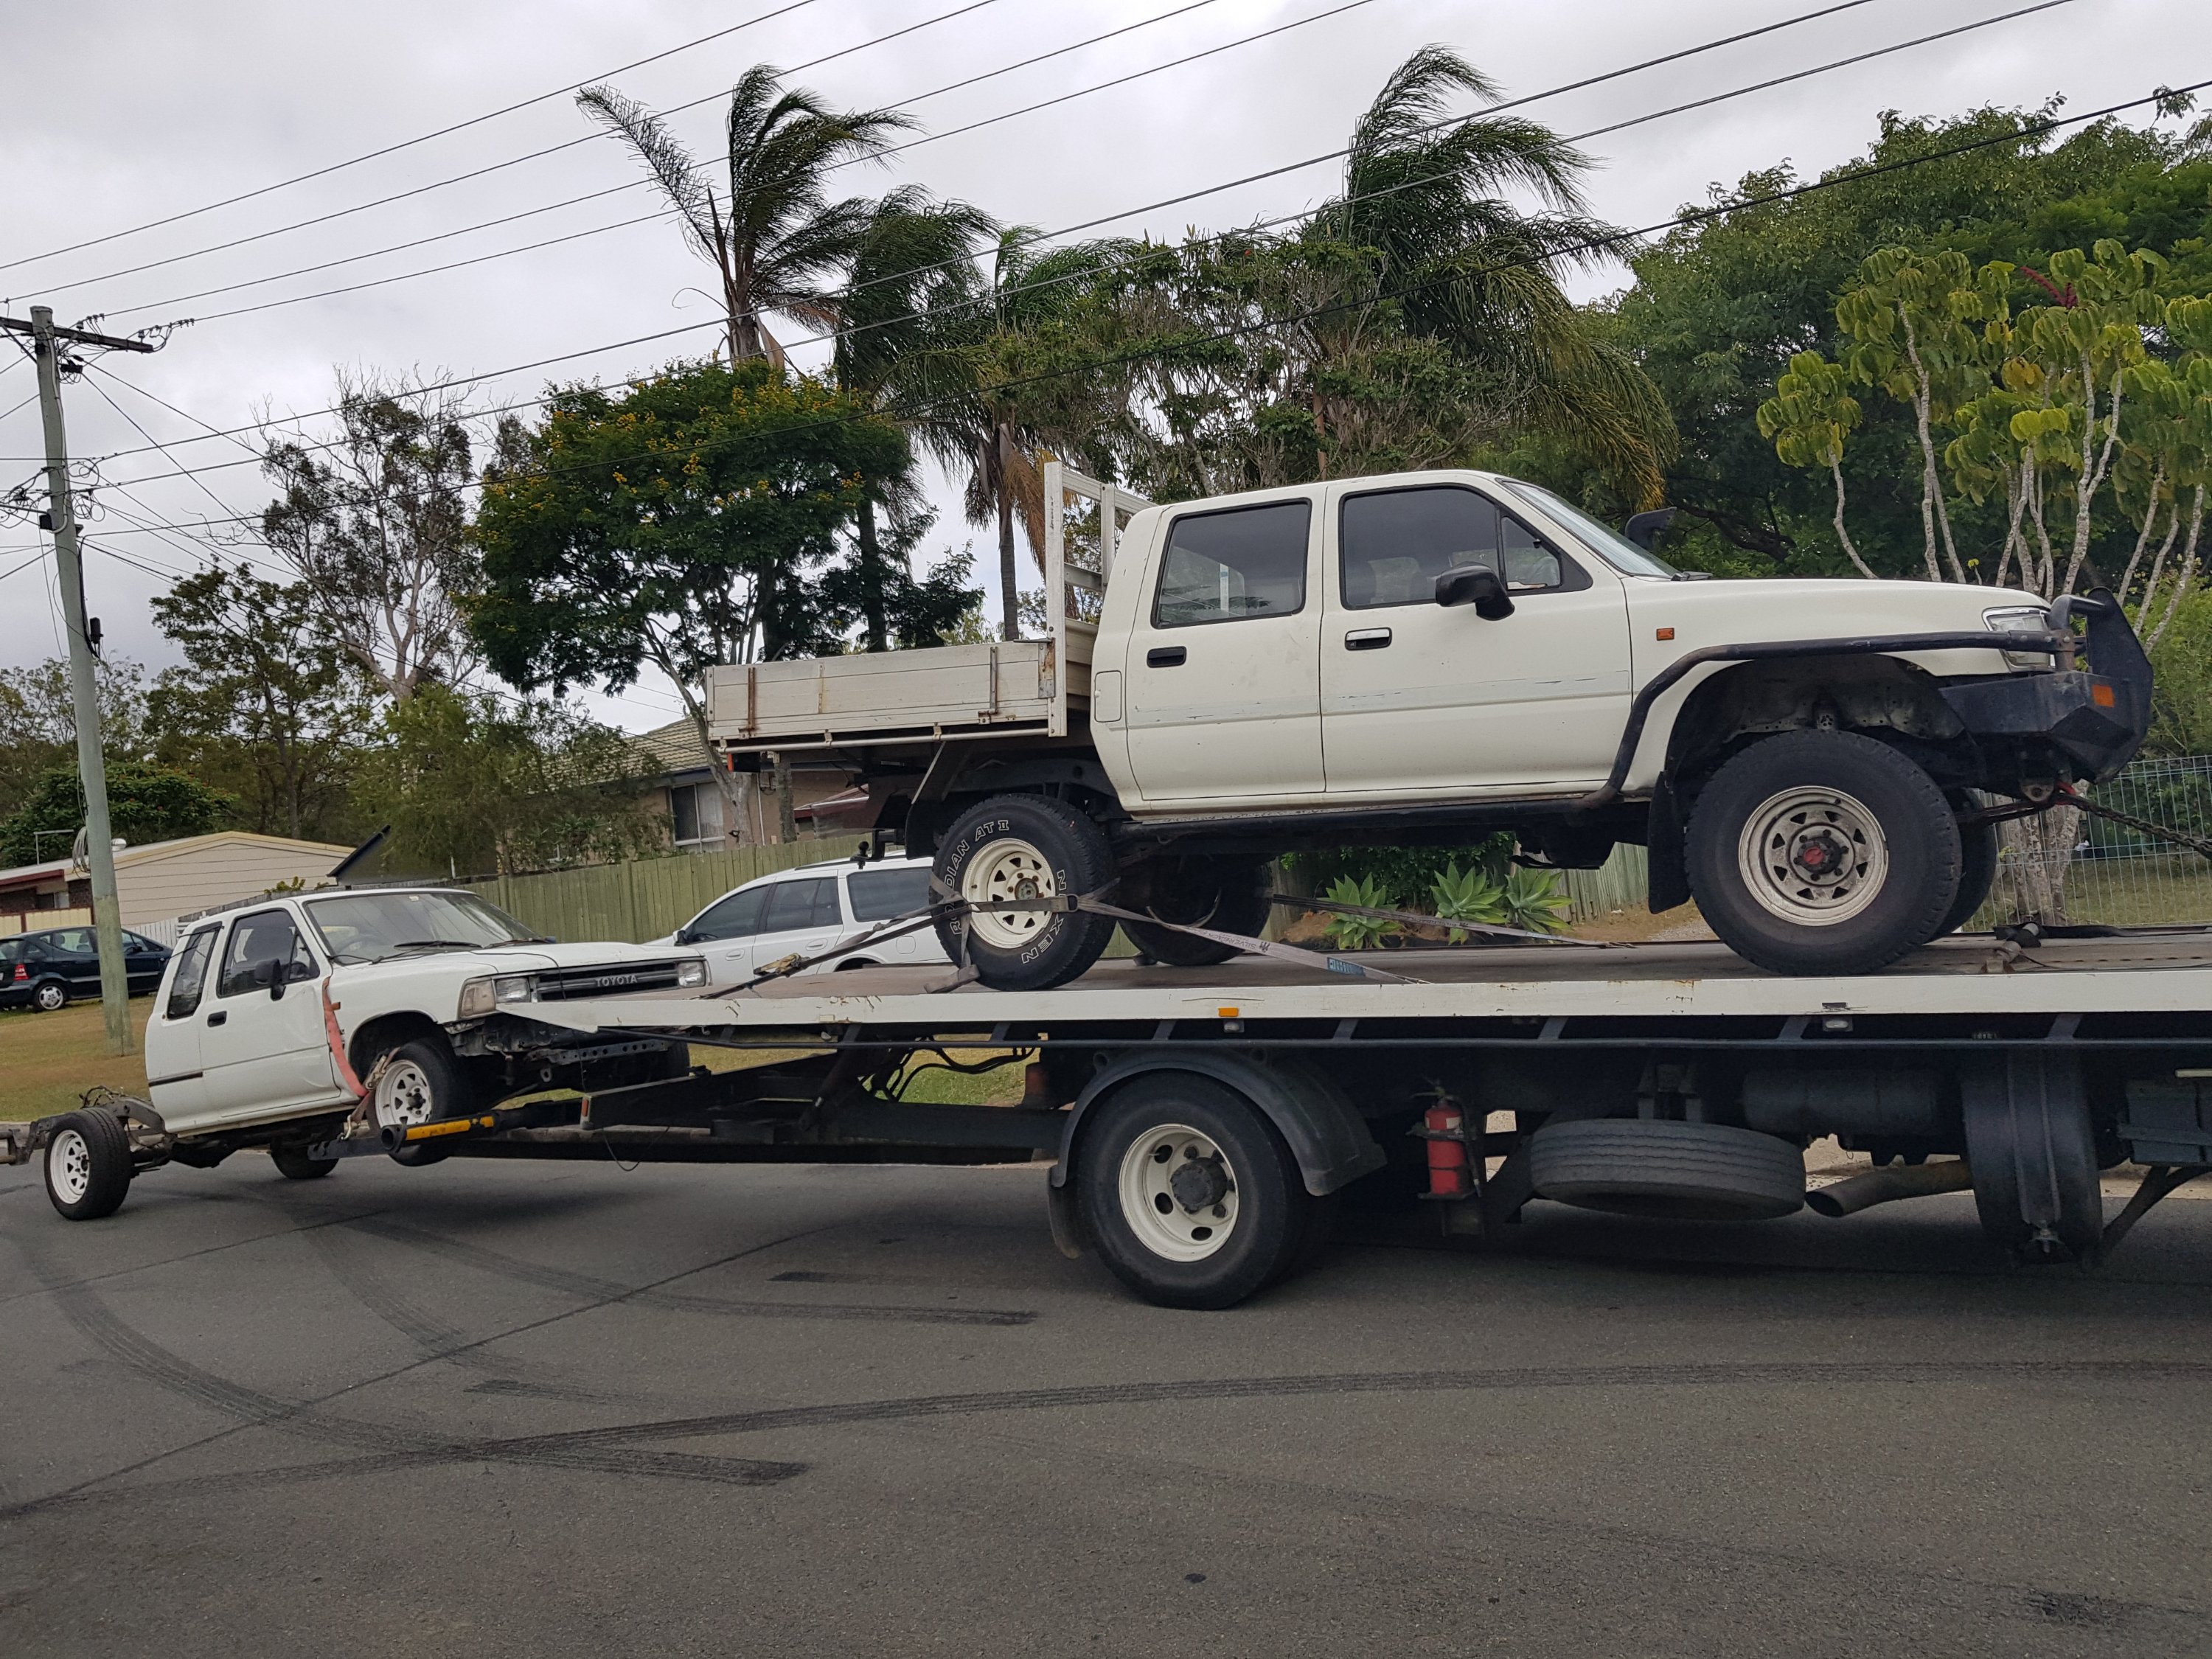 Gold CCOast Car removals cash for cars sell my car Sunshine Coast Brisbane Toowoomba